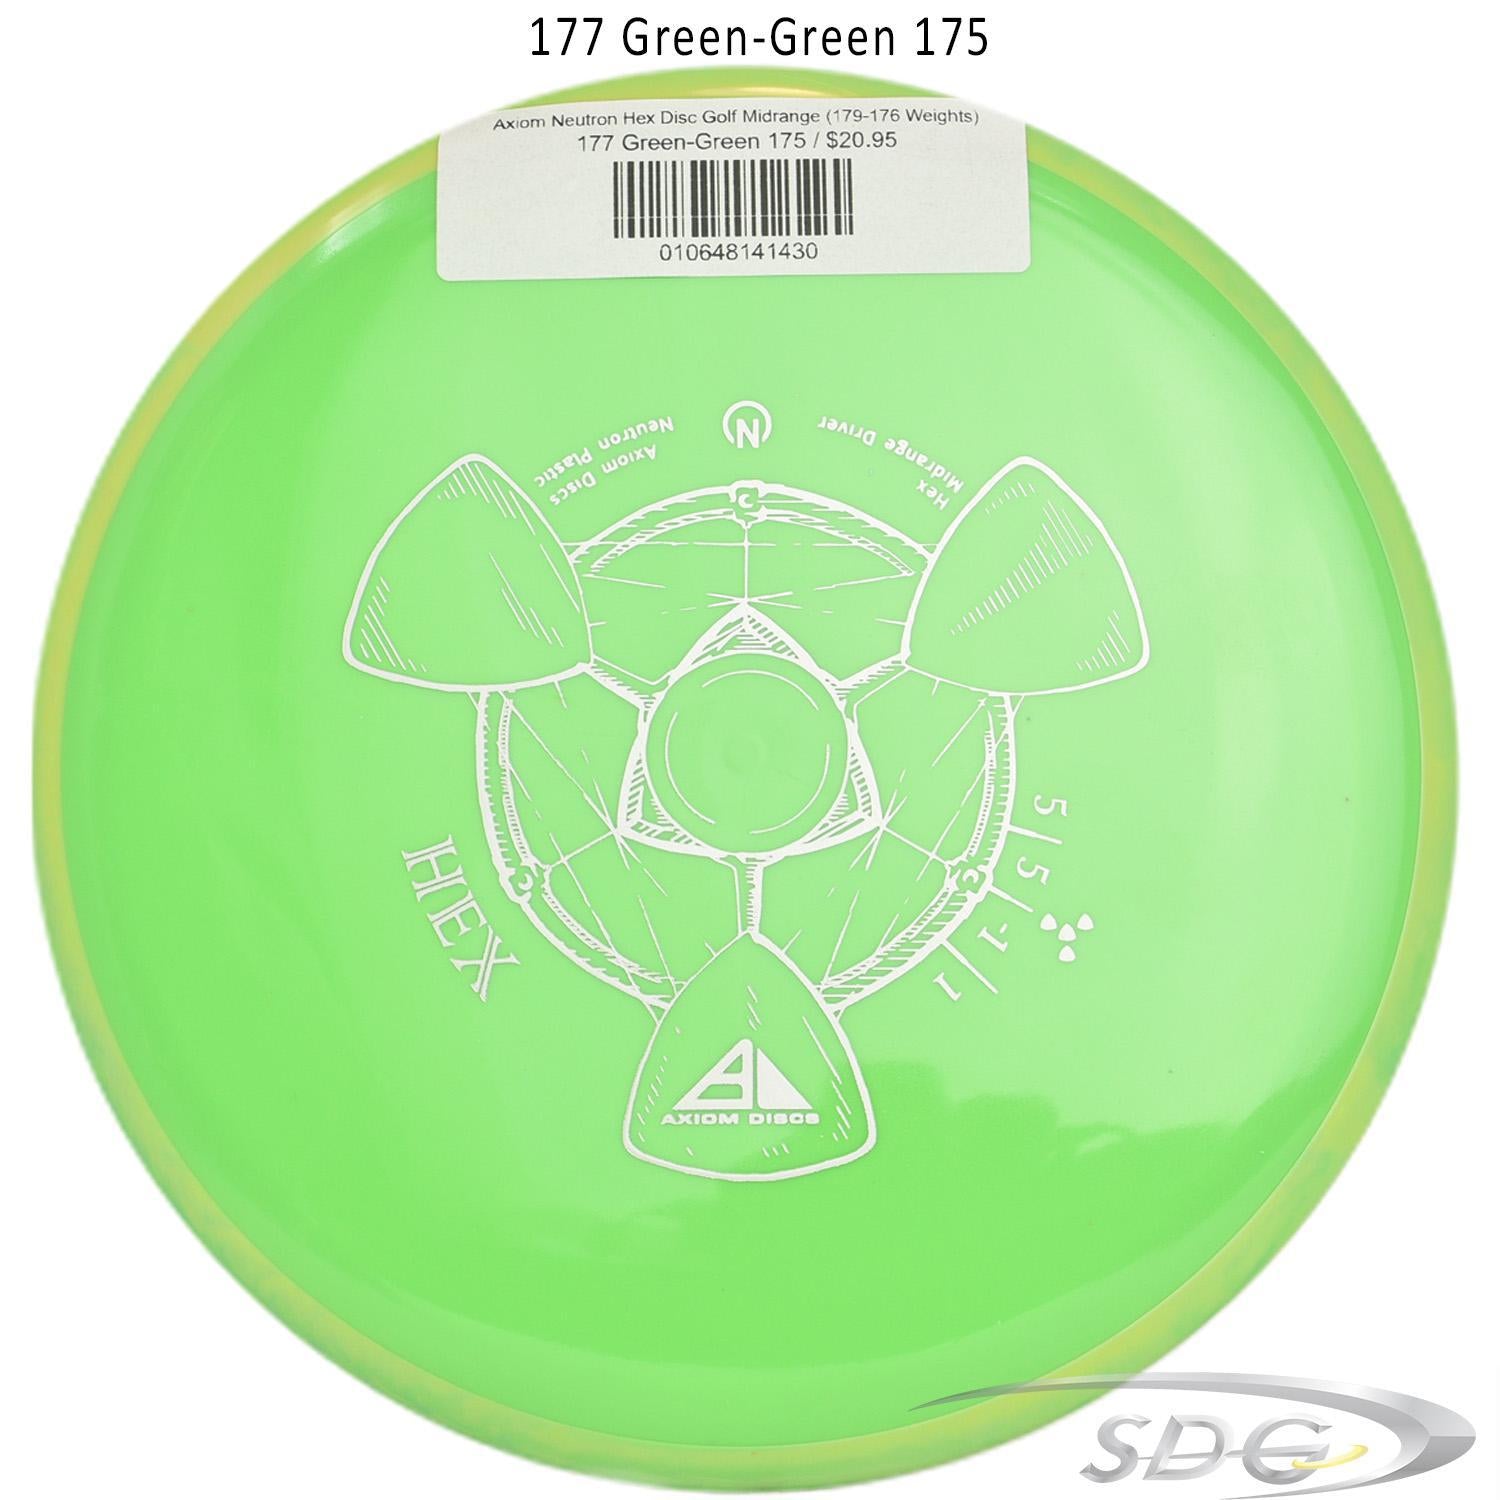 axiom-neutron-hex-disc-golf-midrange 177 Green-Green 175 